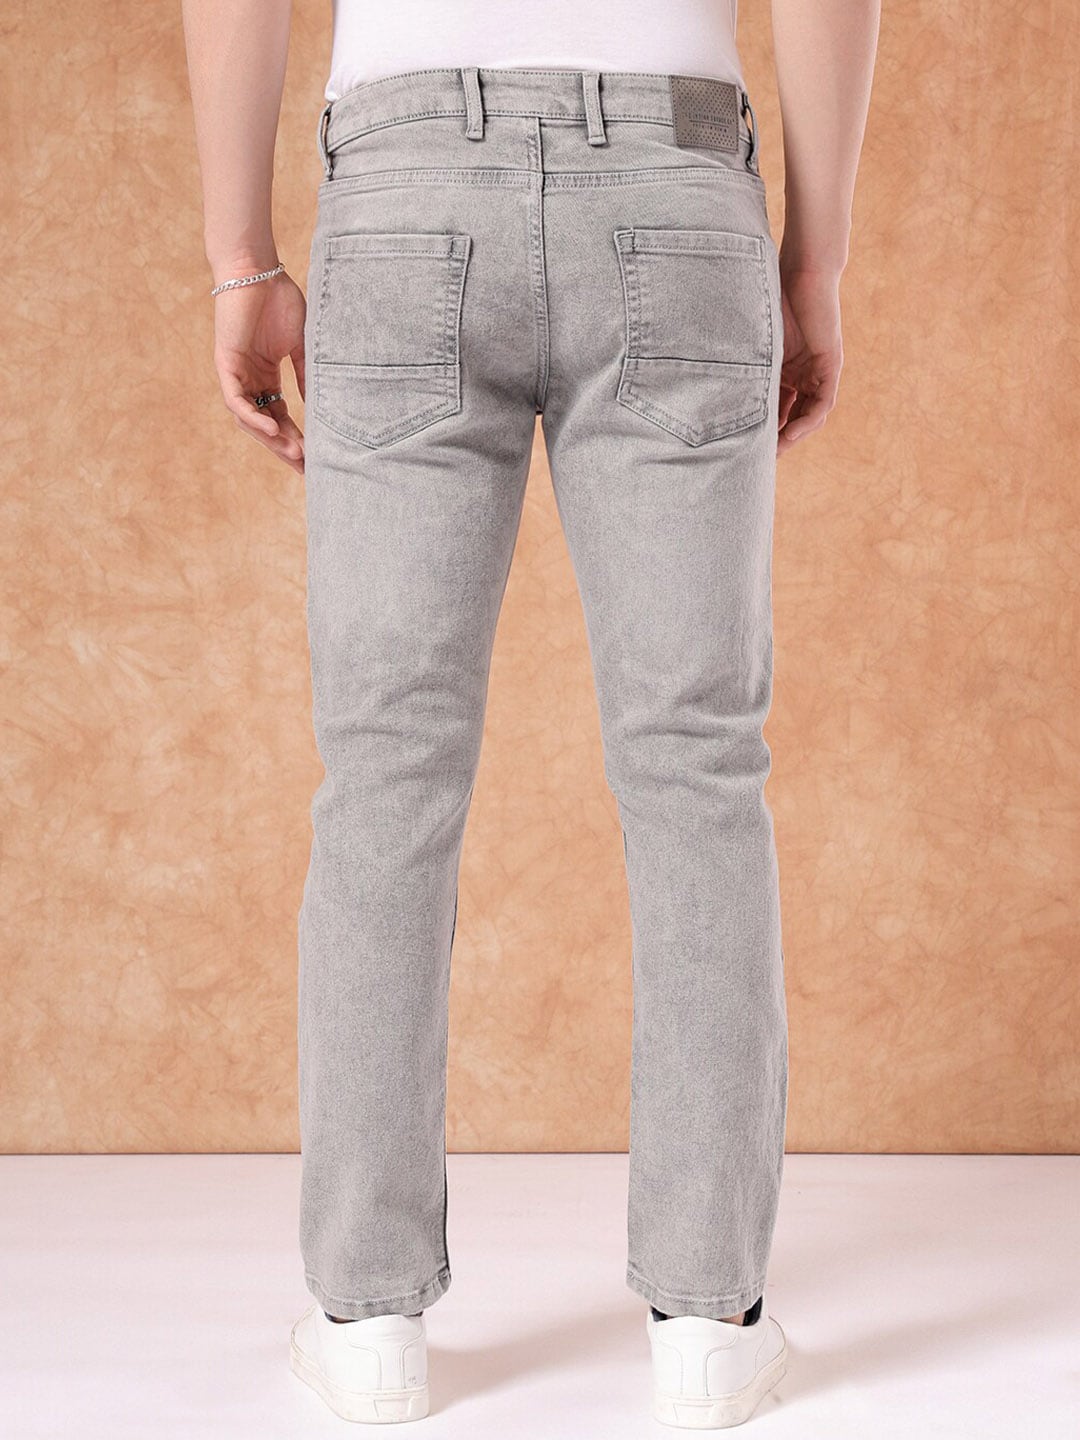 Shop Men Slim Fit Jeans Online.